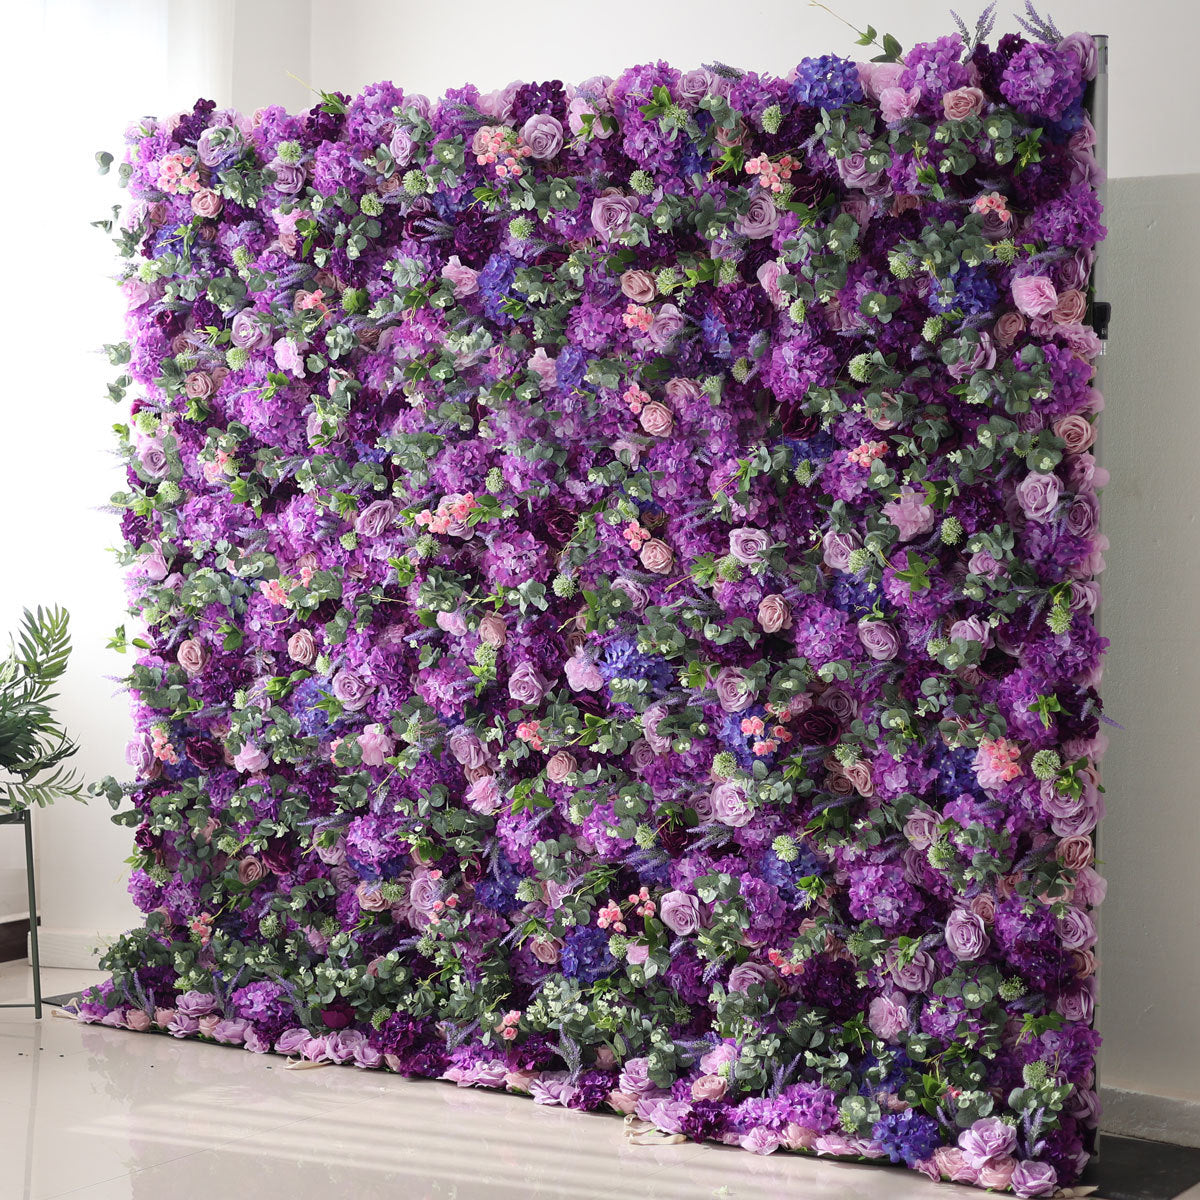 3D Artificial Flower Wall Arrangement Wedding Party Birthday Backdrop Decor HQ1192